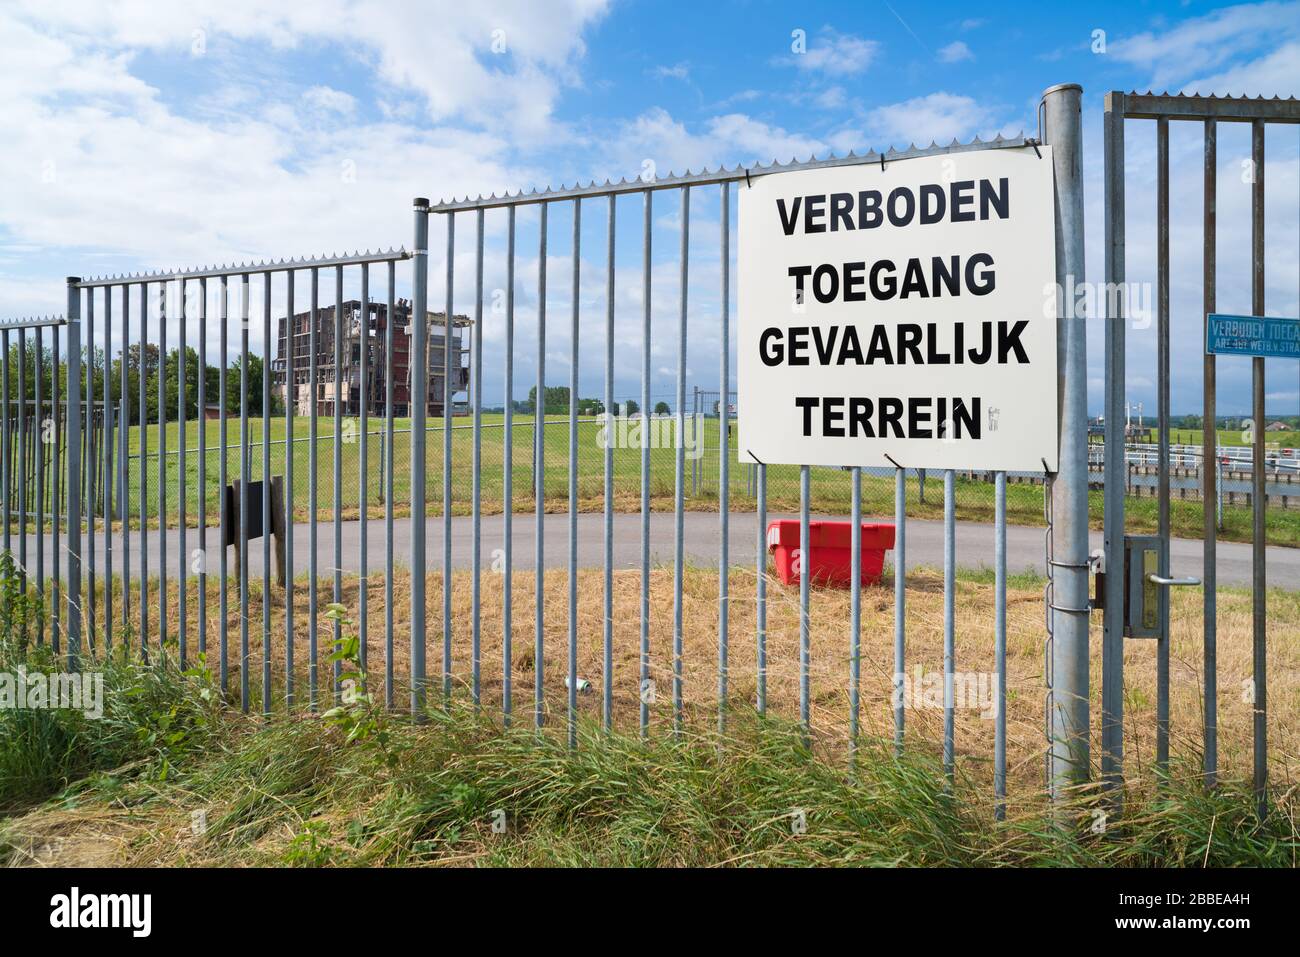 pas de terrein, zone dangereuse (verboden toegang, gevaarlijk terrein en néerlandais) sur une clôture métallique devant une ruine d'une ancienne usine Banque D'Images